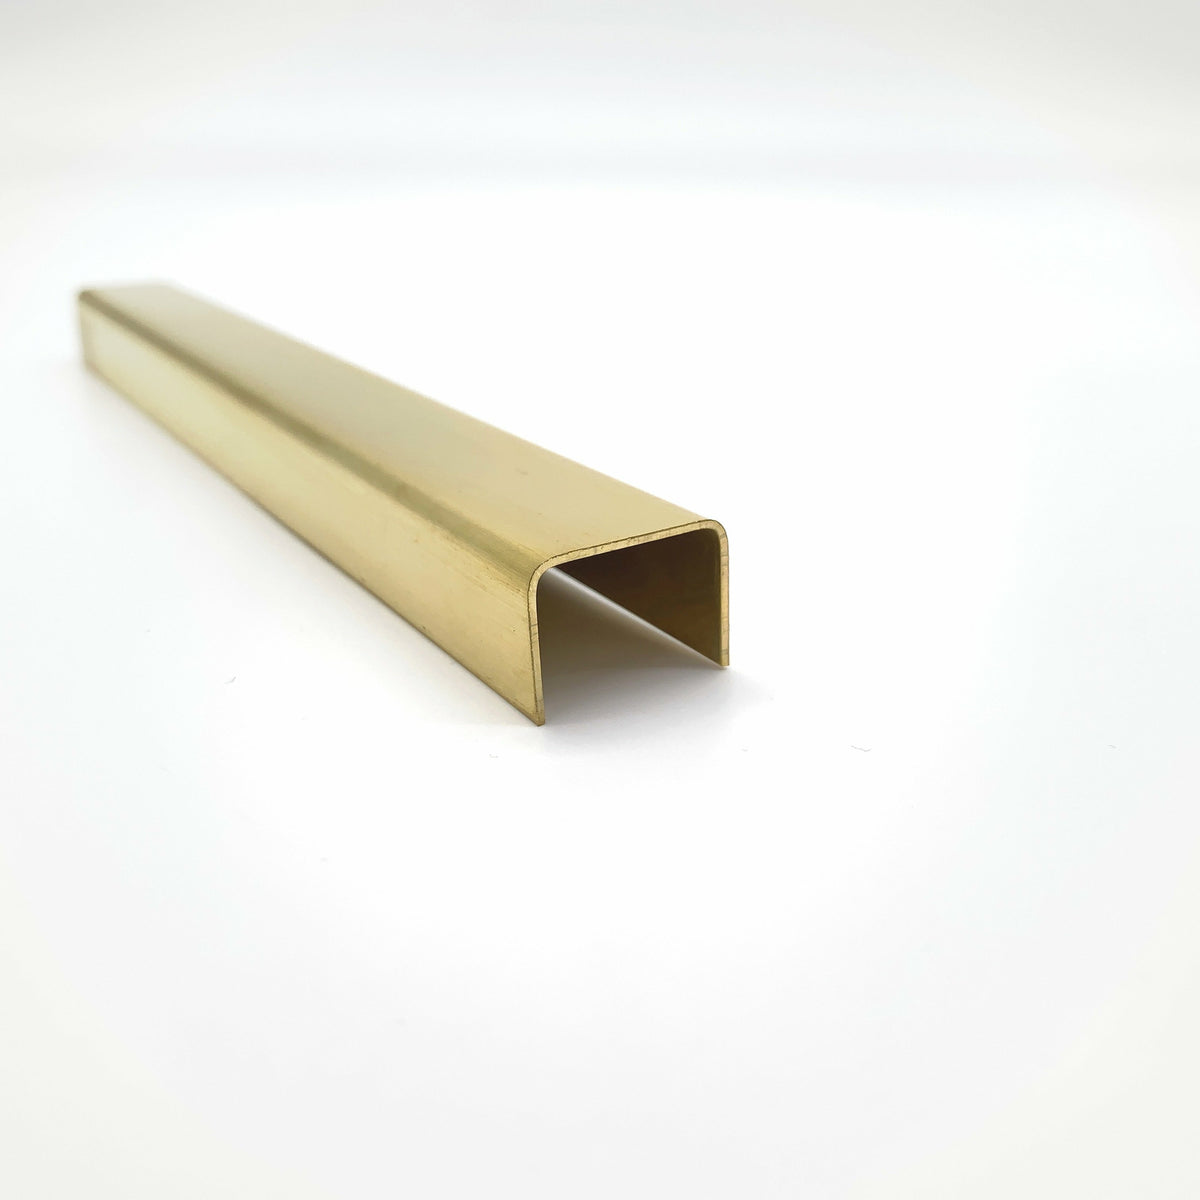 Messing Winkelprofil - U-Profil - Winkel - DIY Projekte 1,0mm dick